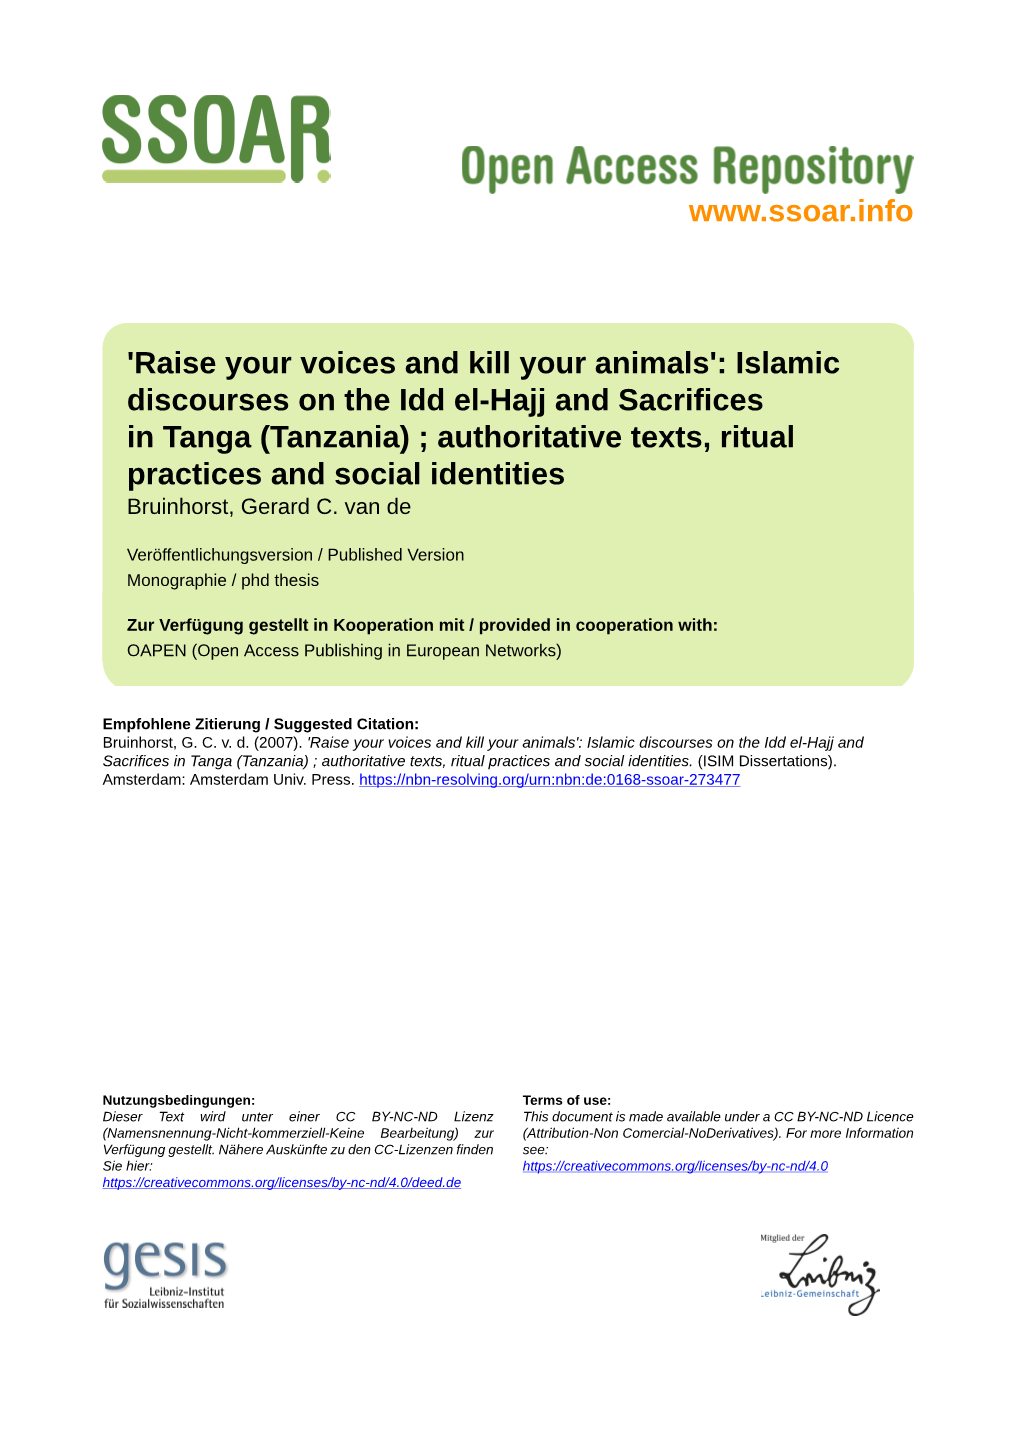 Islamic Discourses on the Idd El-Hajj and Sacrifices in Tanga (Tanzania) ; Authoritative Texts, Ritual Practices and Social Identities Bruinhorst, Gerard C